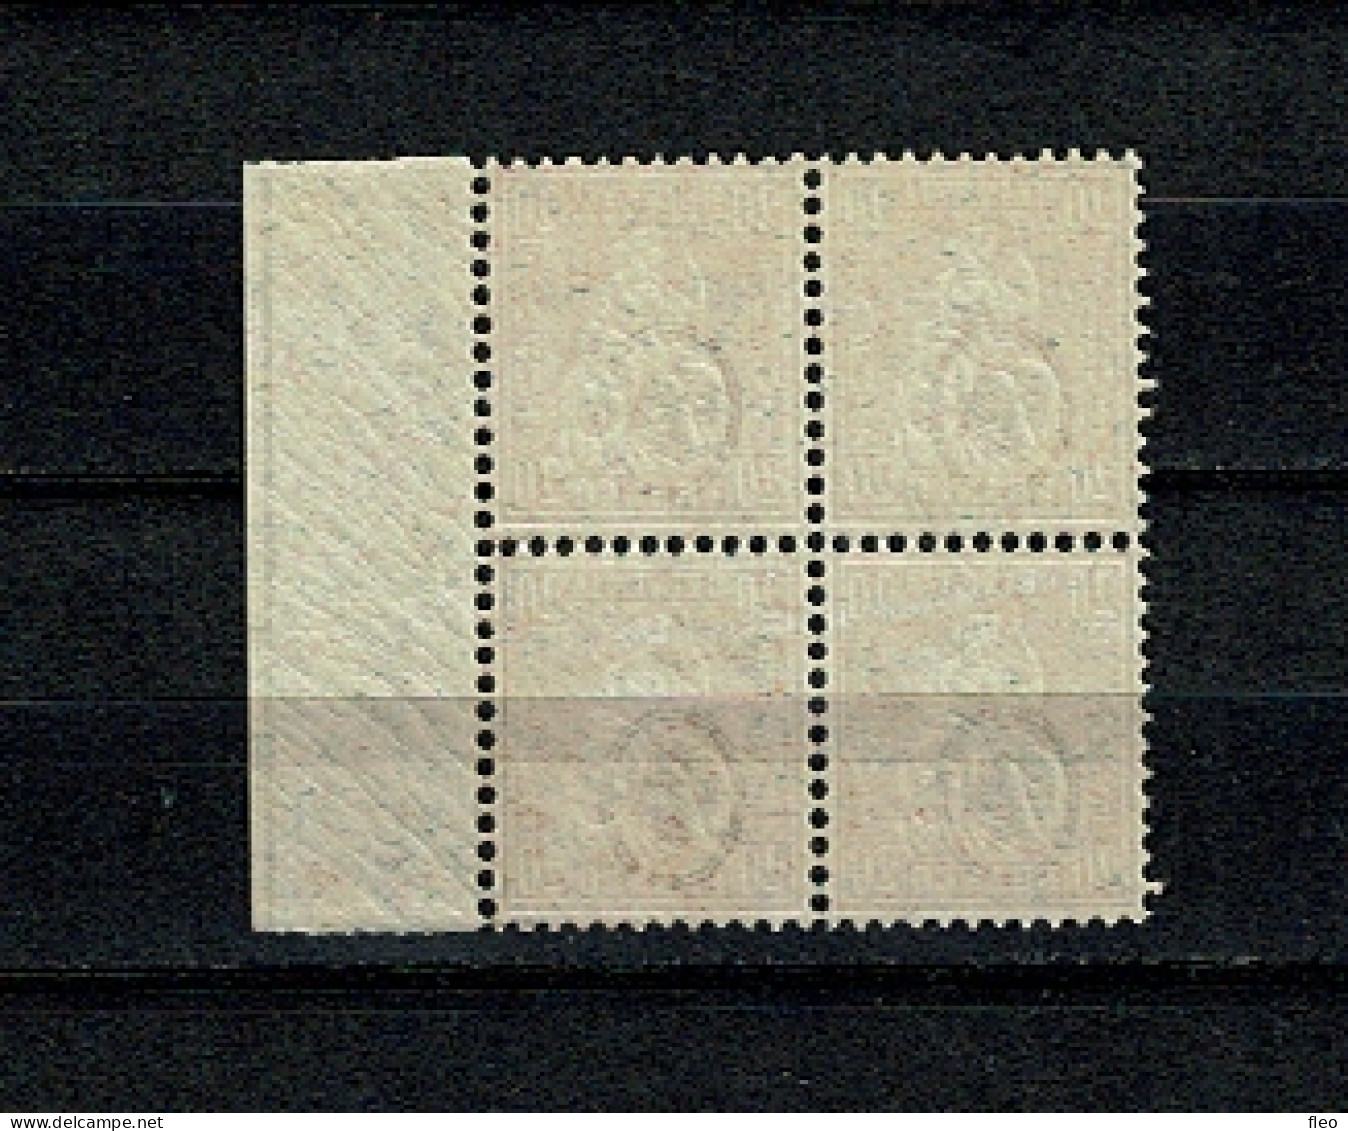 Switzerland Timbres - Suisse -1862-1881 - 4 X 20 C. - Yvert N° 37 - Non Oblitéré - Dentelés -MNH** - Ongebruikt